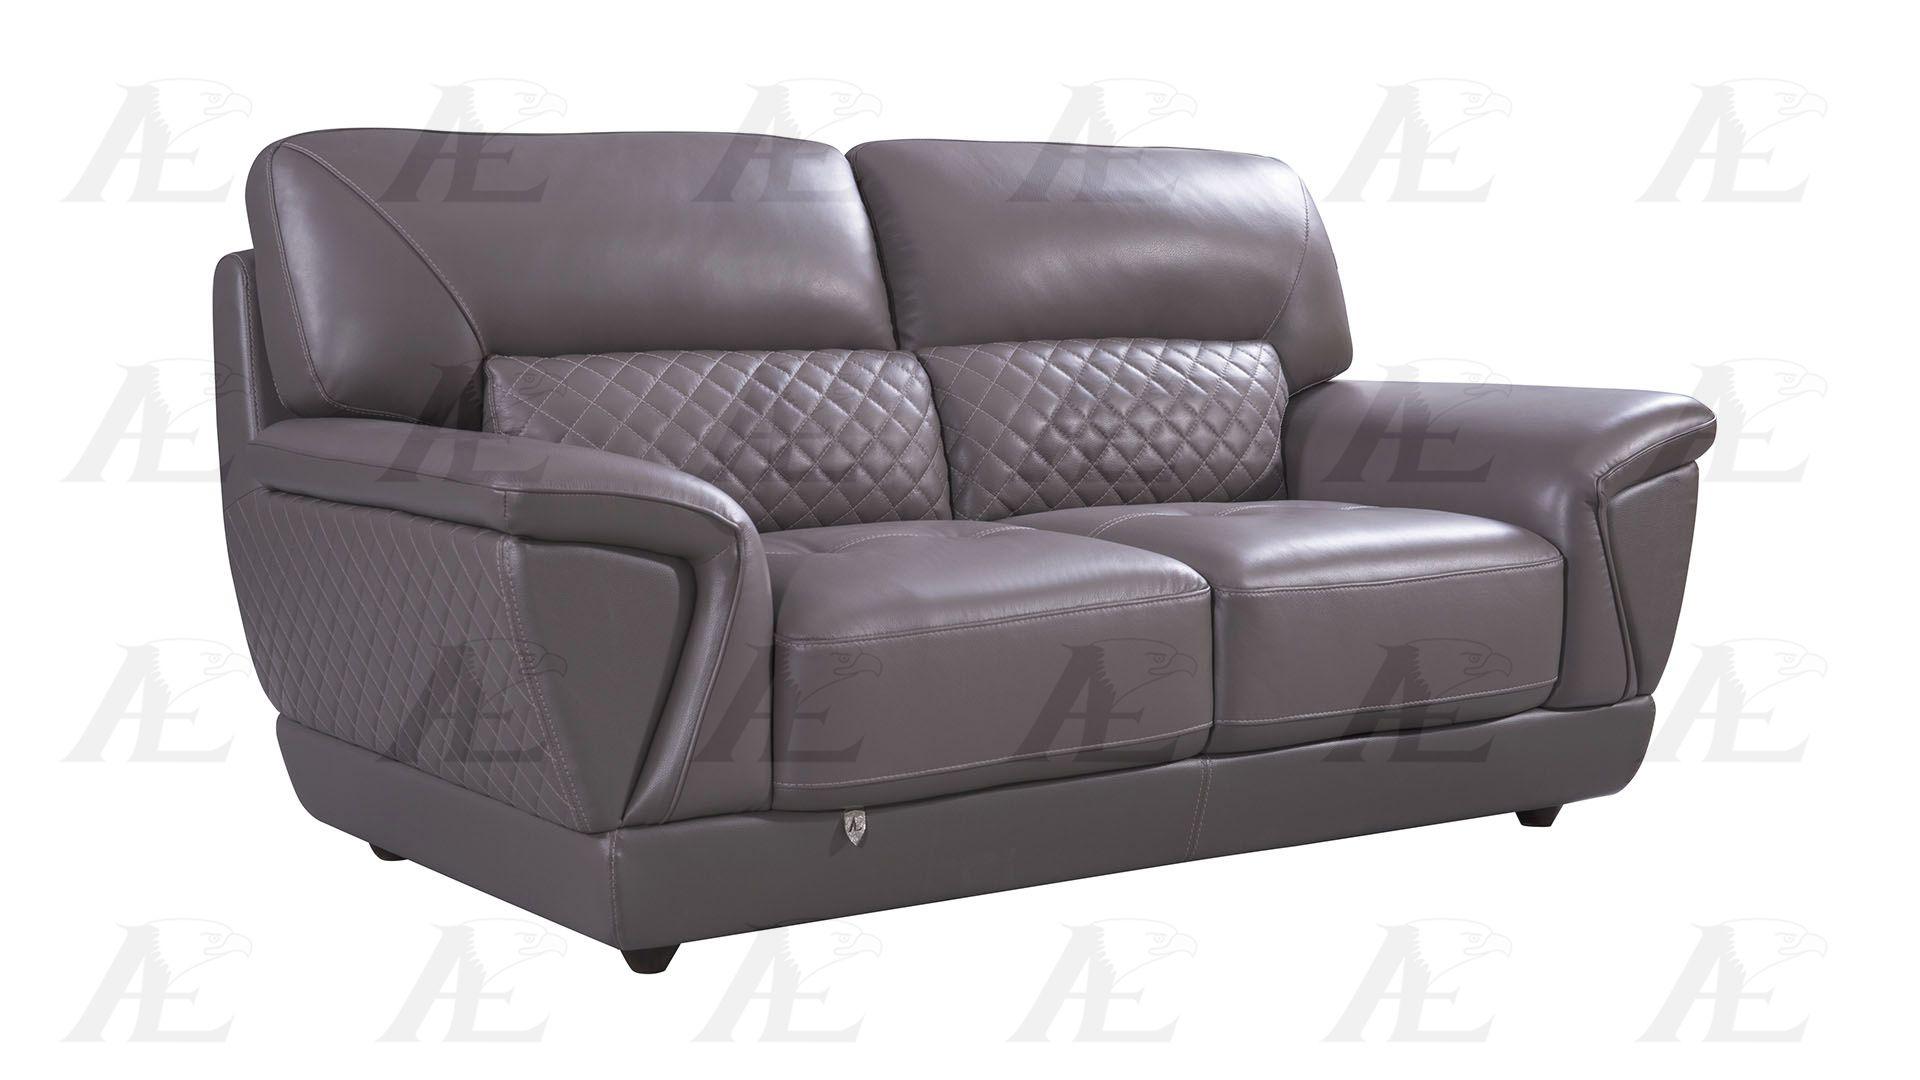 

    
EK099-DT-LS American Eagle Furniture Loveseat
